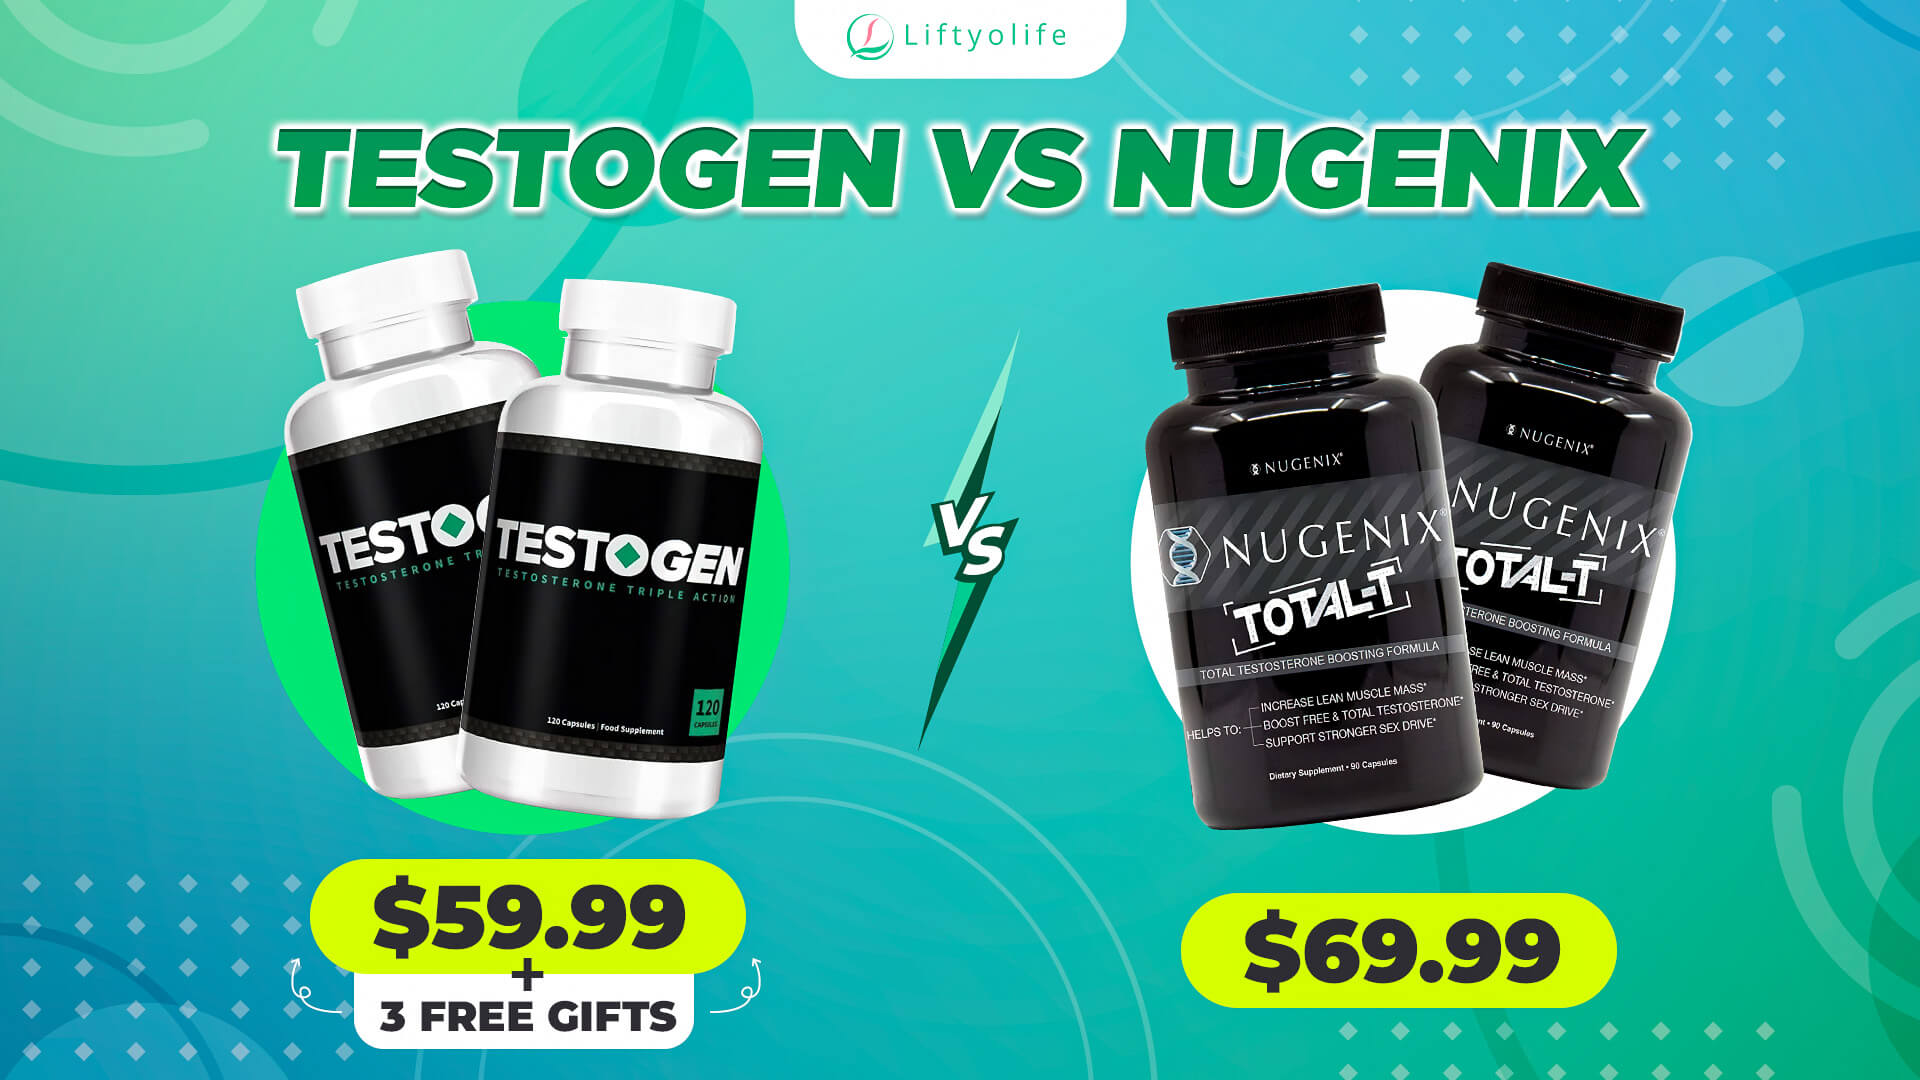 Testogen vs Nugenix: Pricing